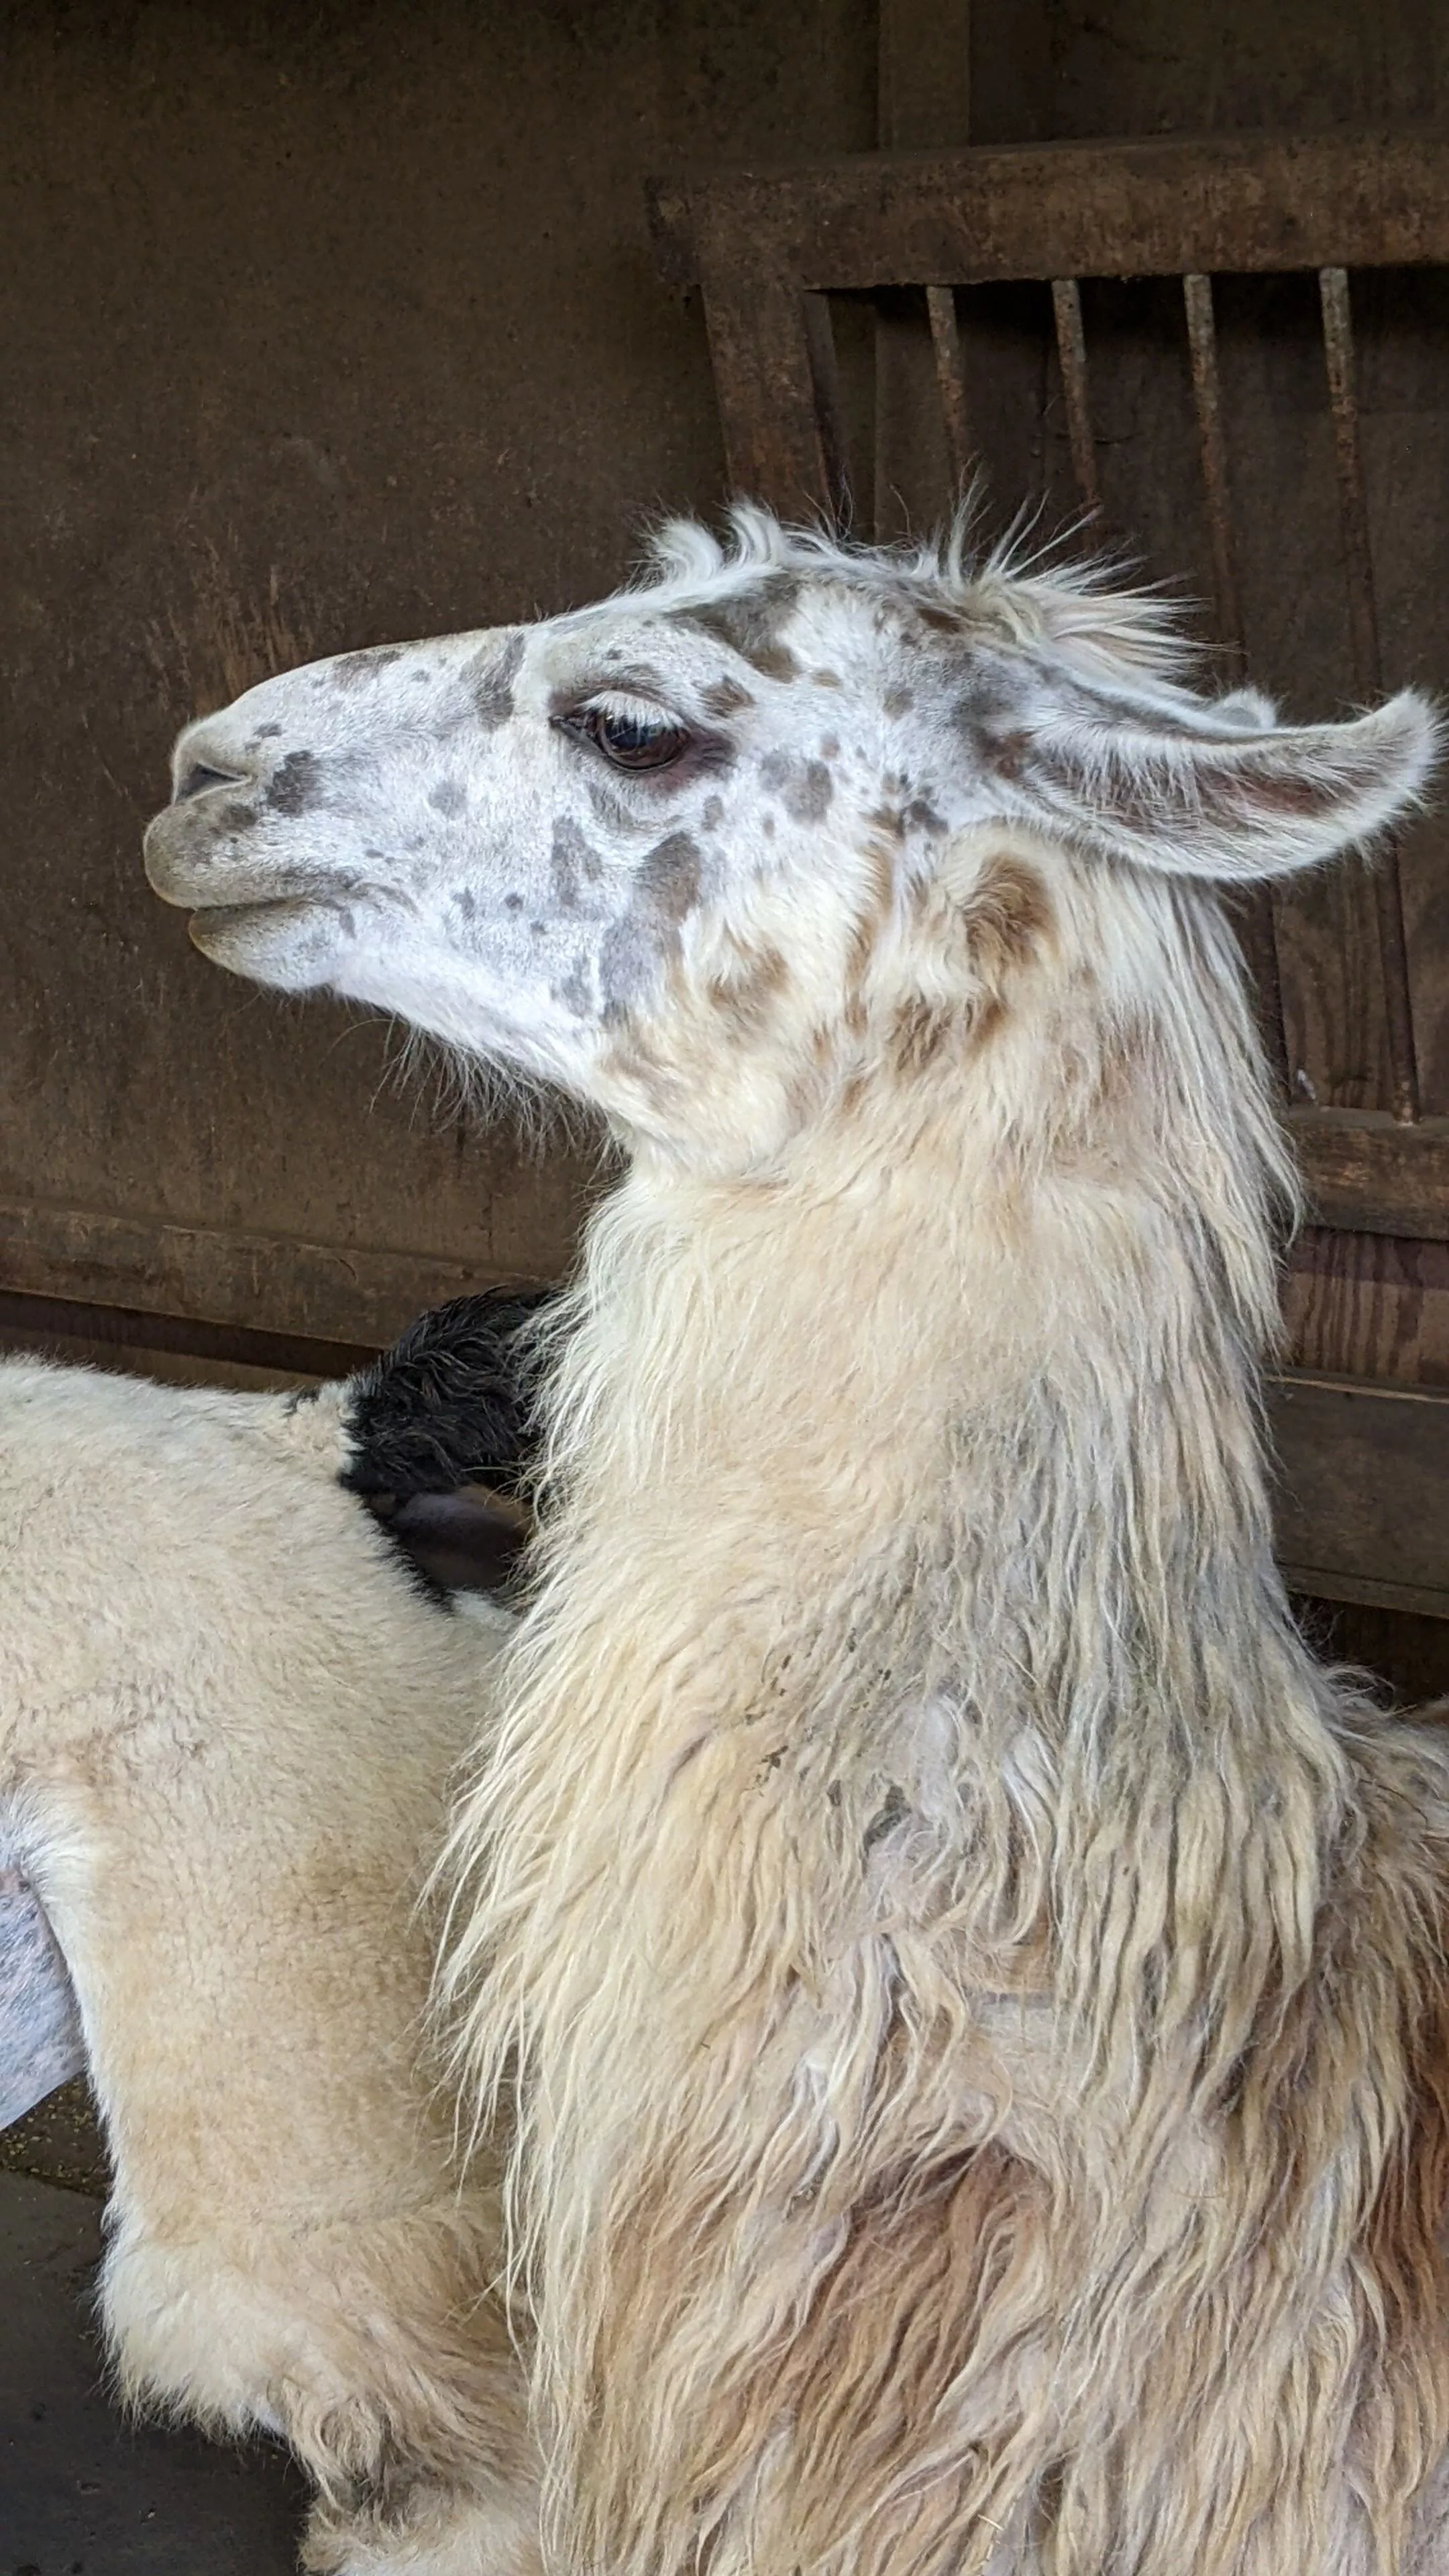 An image of a llama named Speckles inside a barn